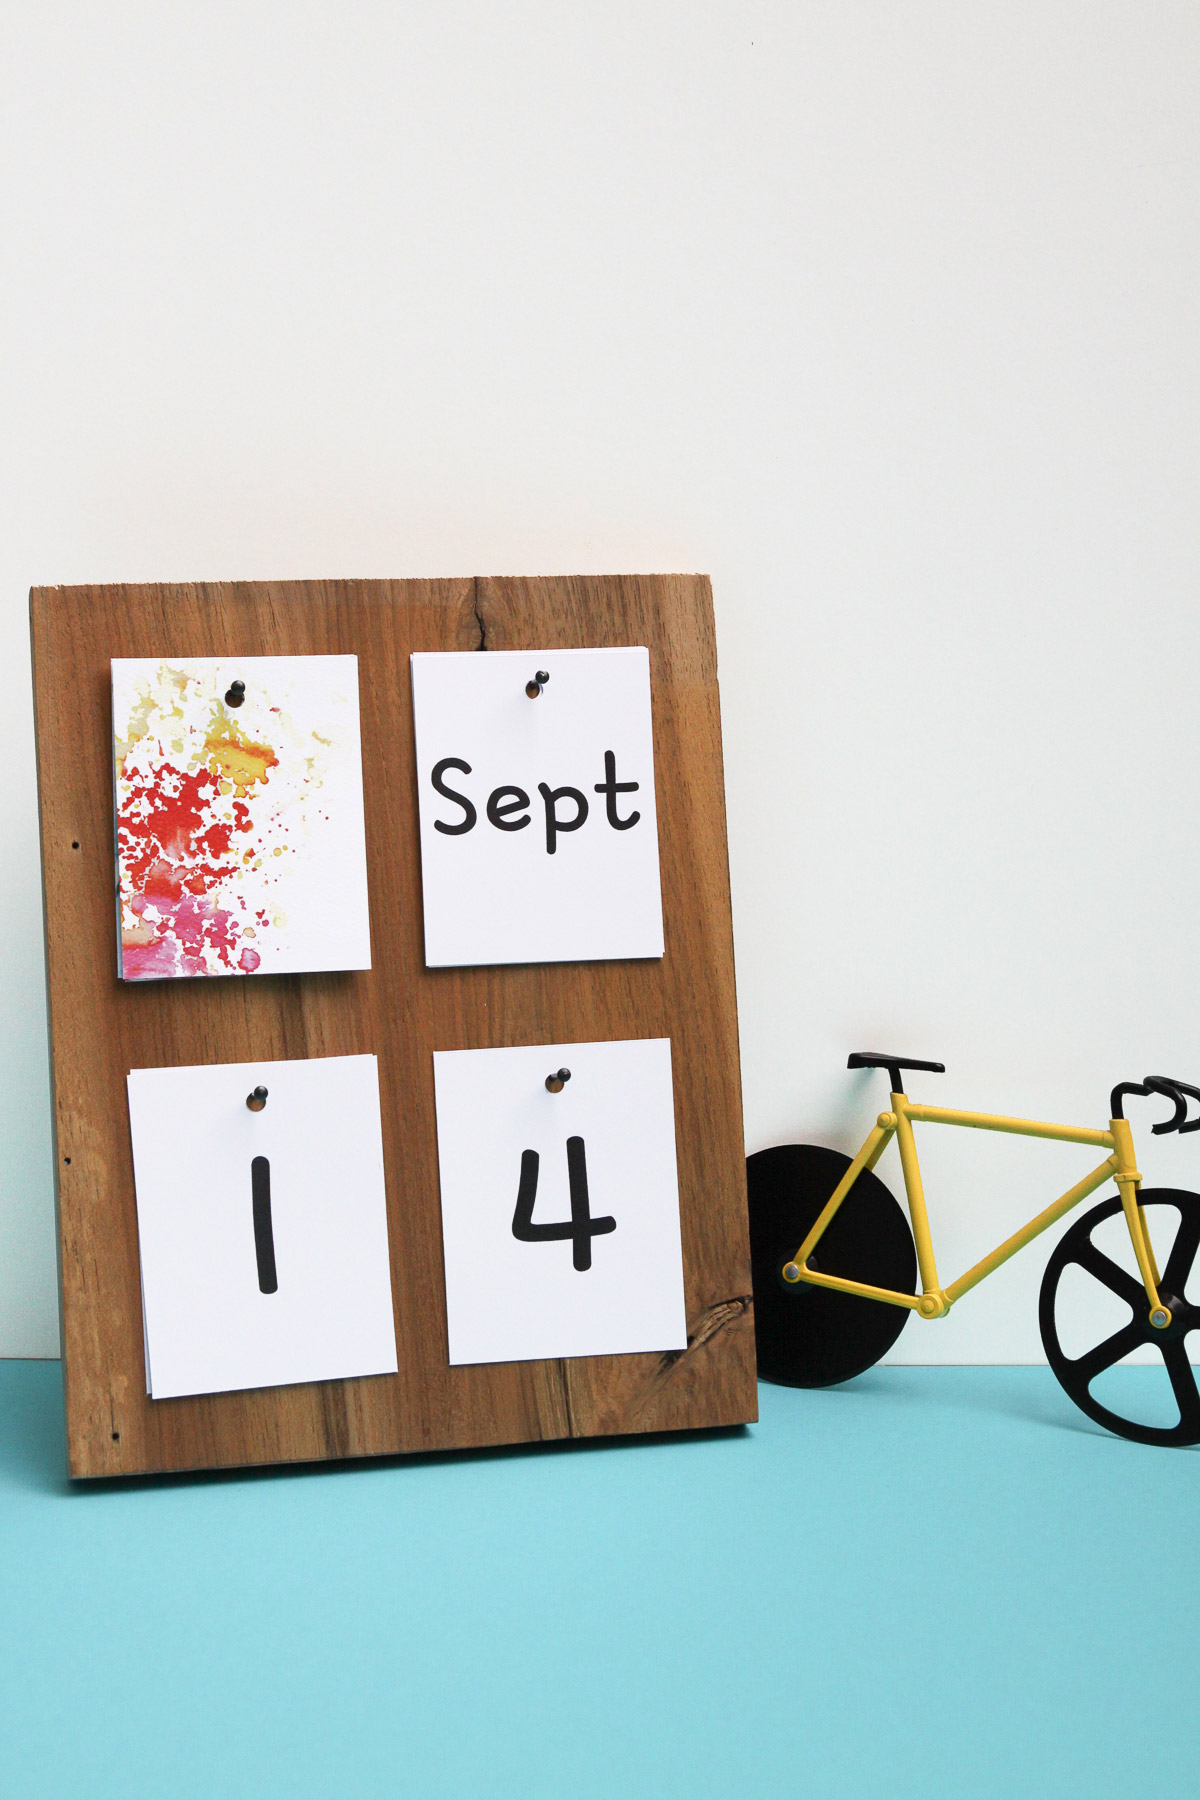 DIY Desk Calendar + a Free Printable - Make your own calendar this year with our free printable! - www.yeswemadethis.com